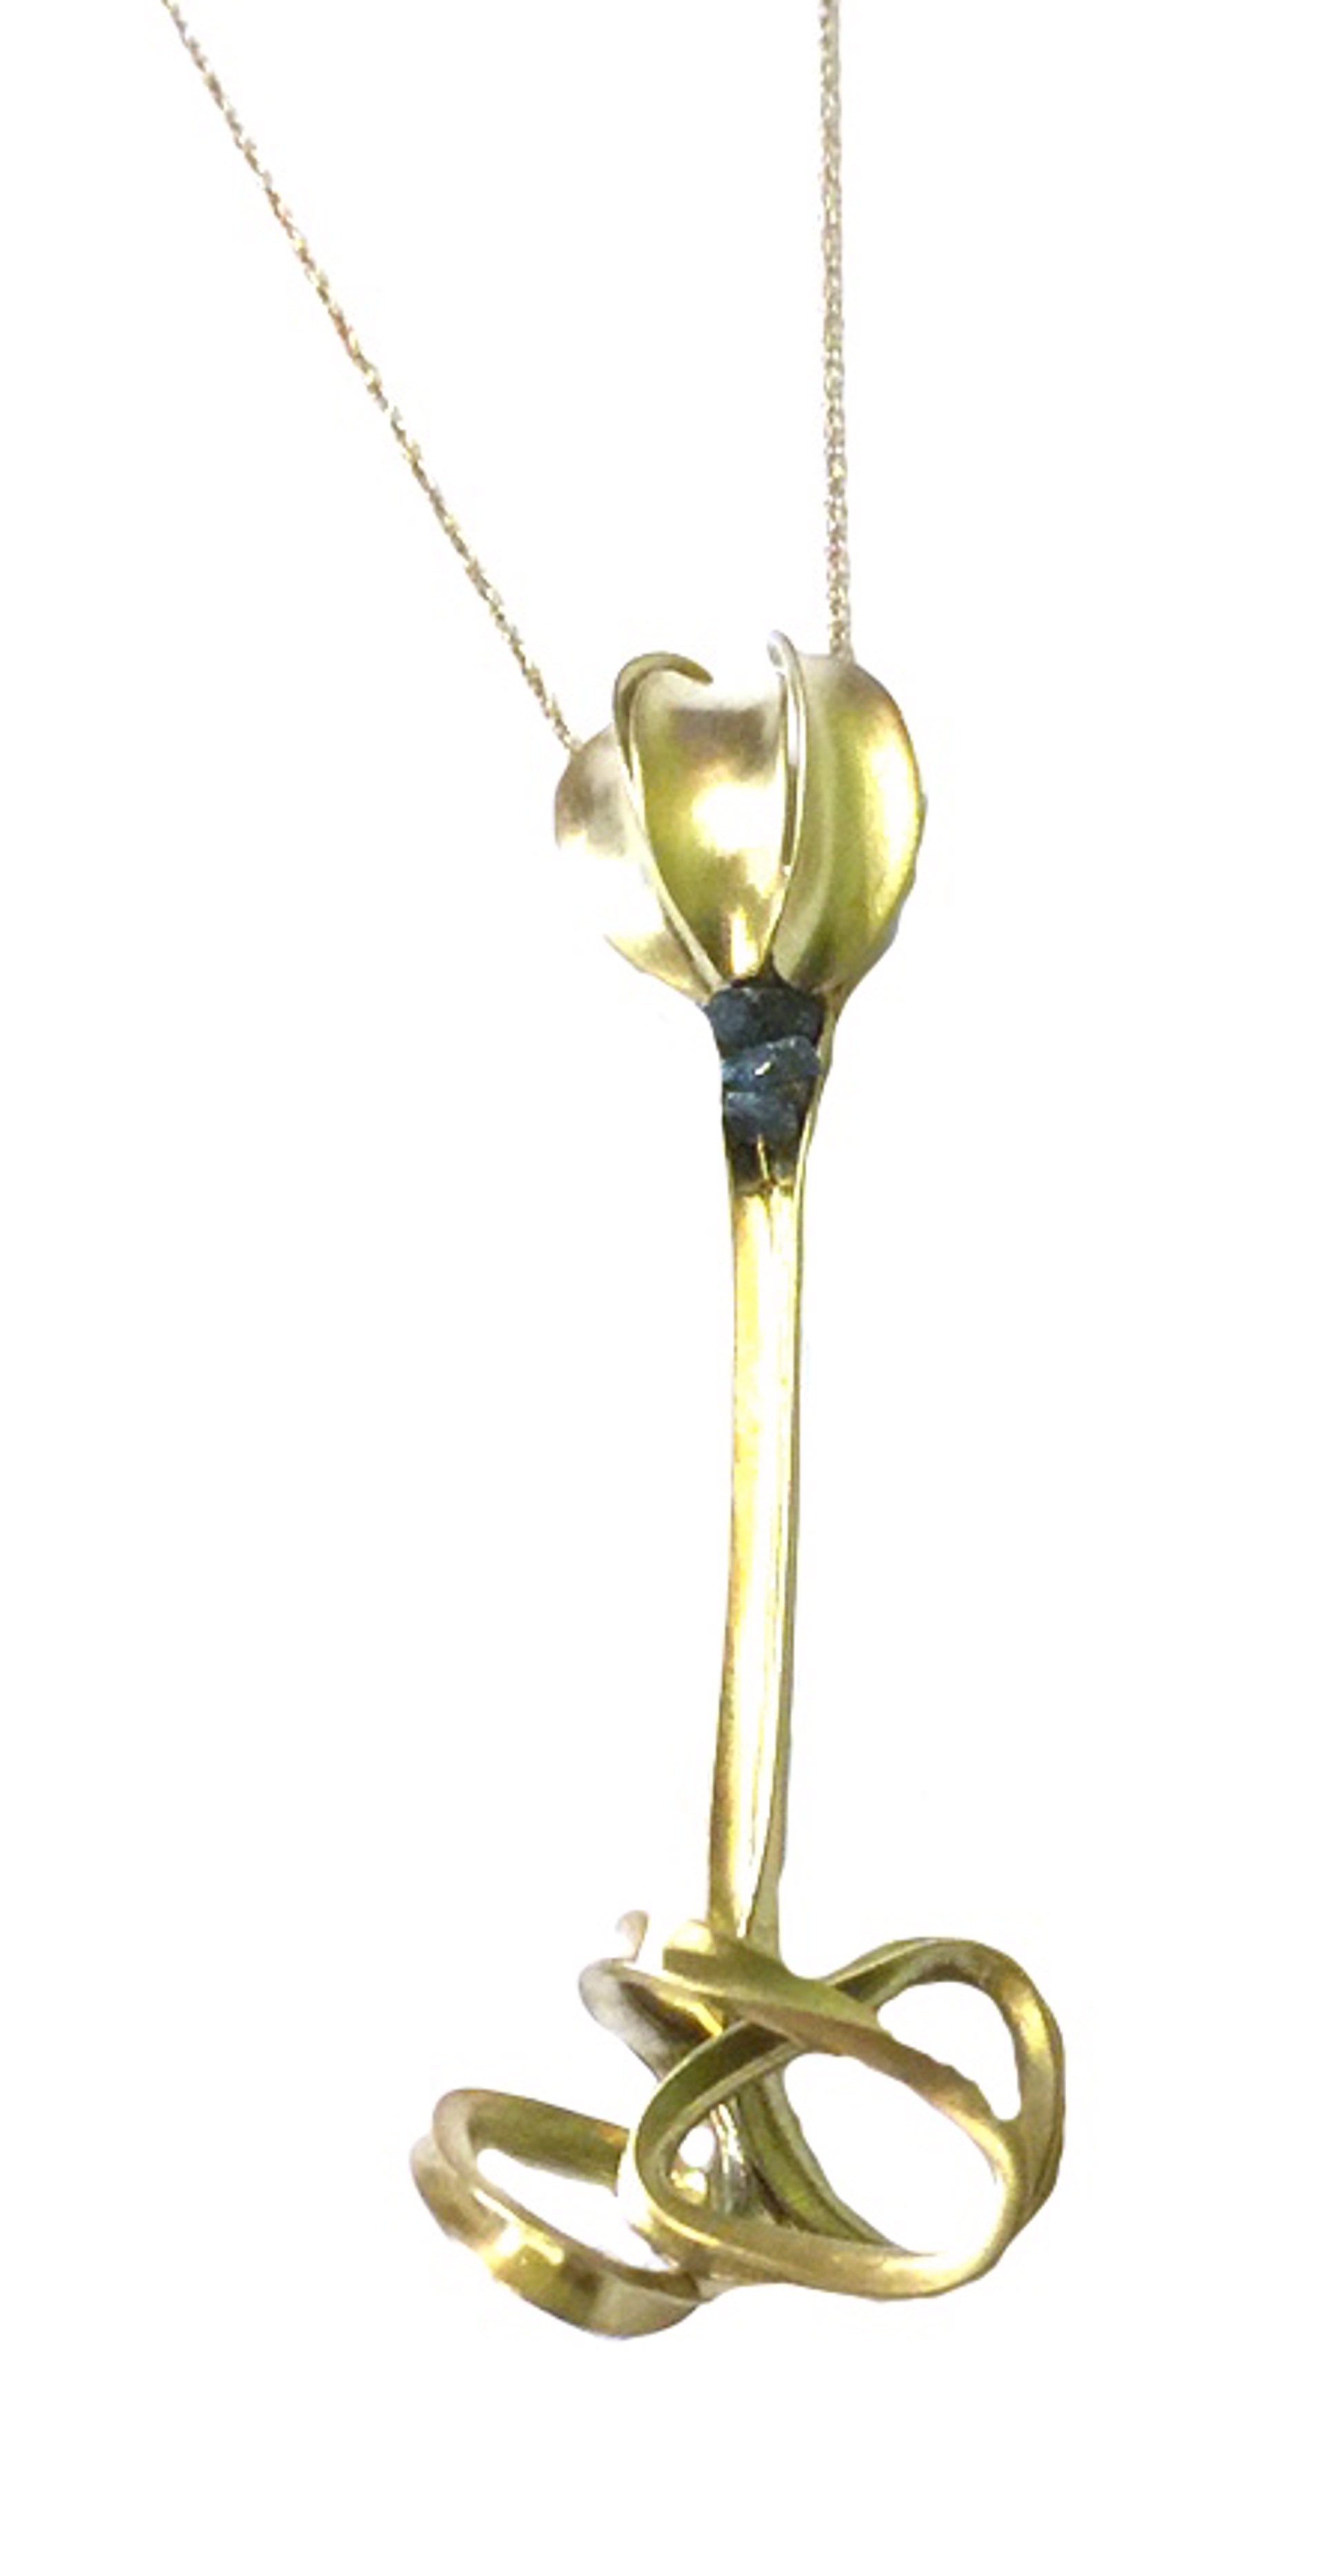 Necklace - 18k Gold Tulip with Blue Diamonds 3a by Pattie Parkhurst